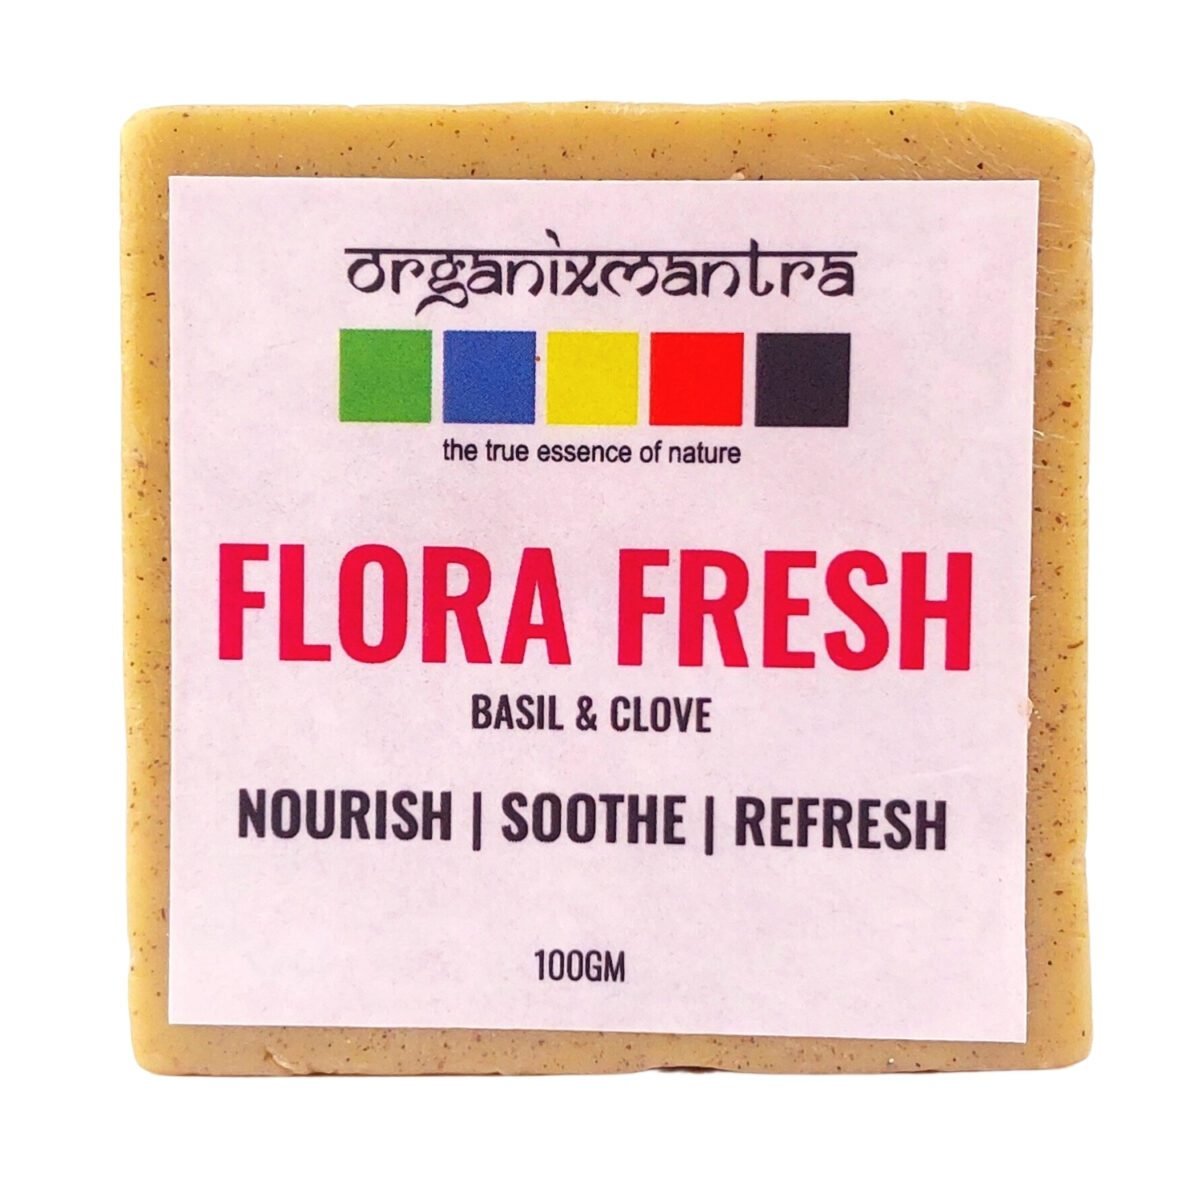 Flora Fresh Natural Bath Soap 100 gm-front- Organix Mantra